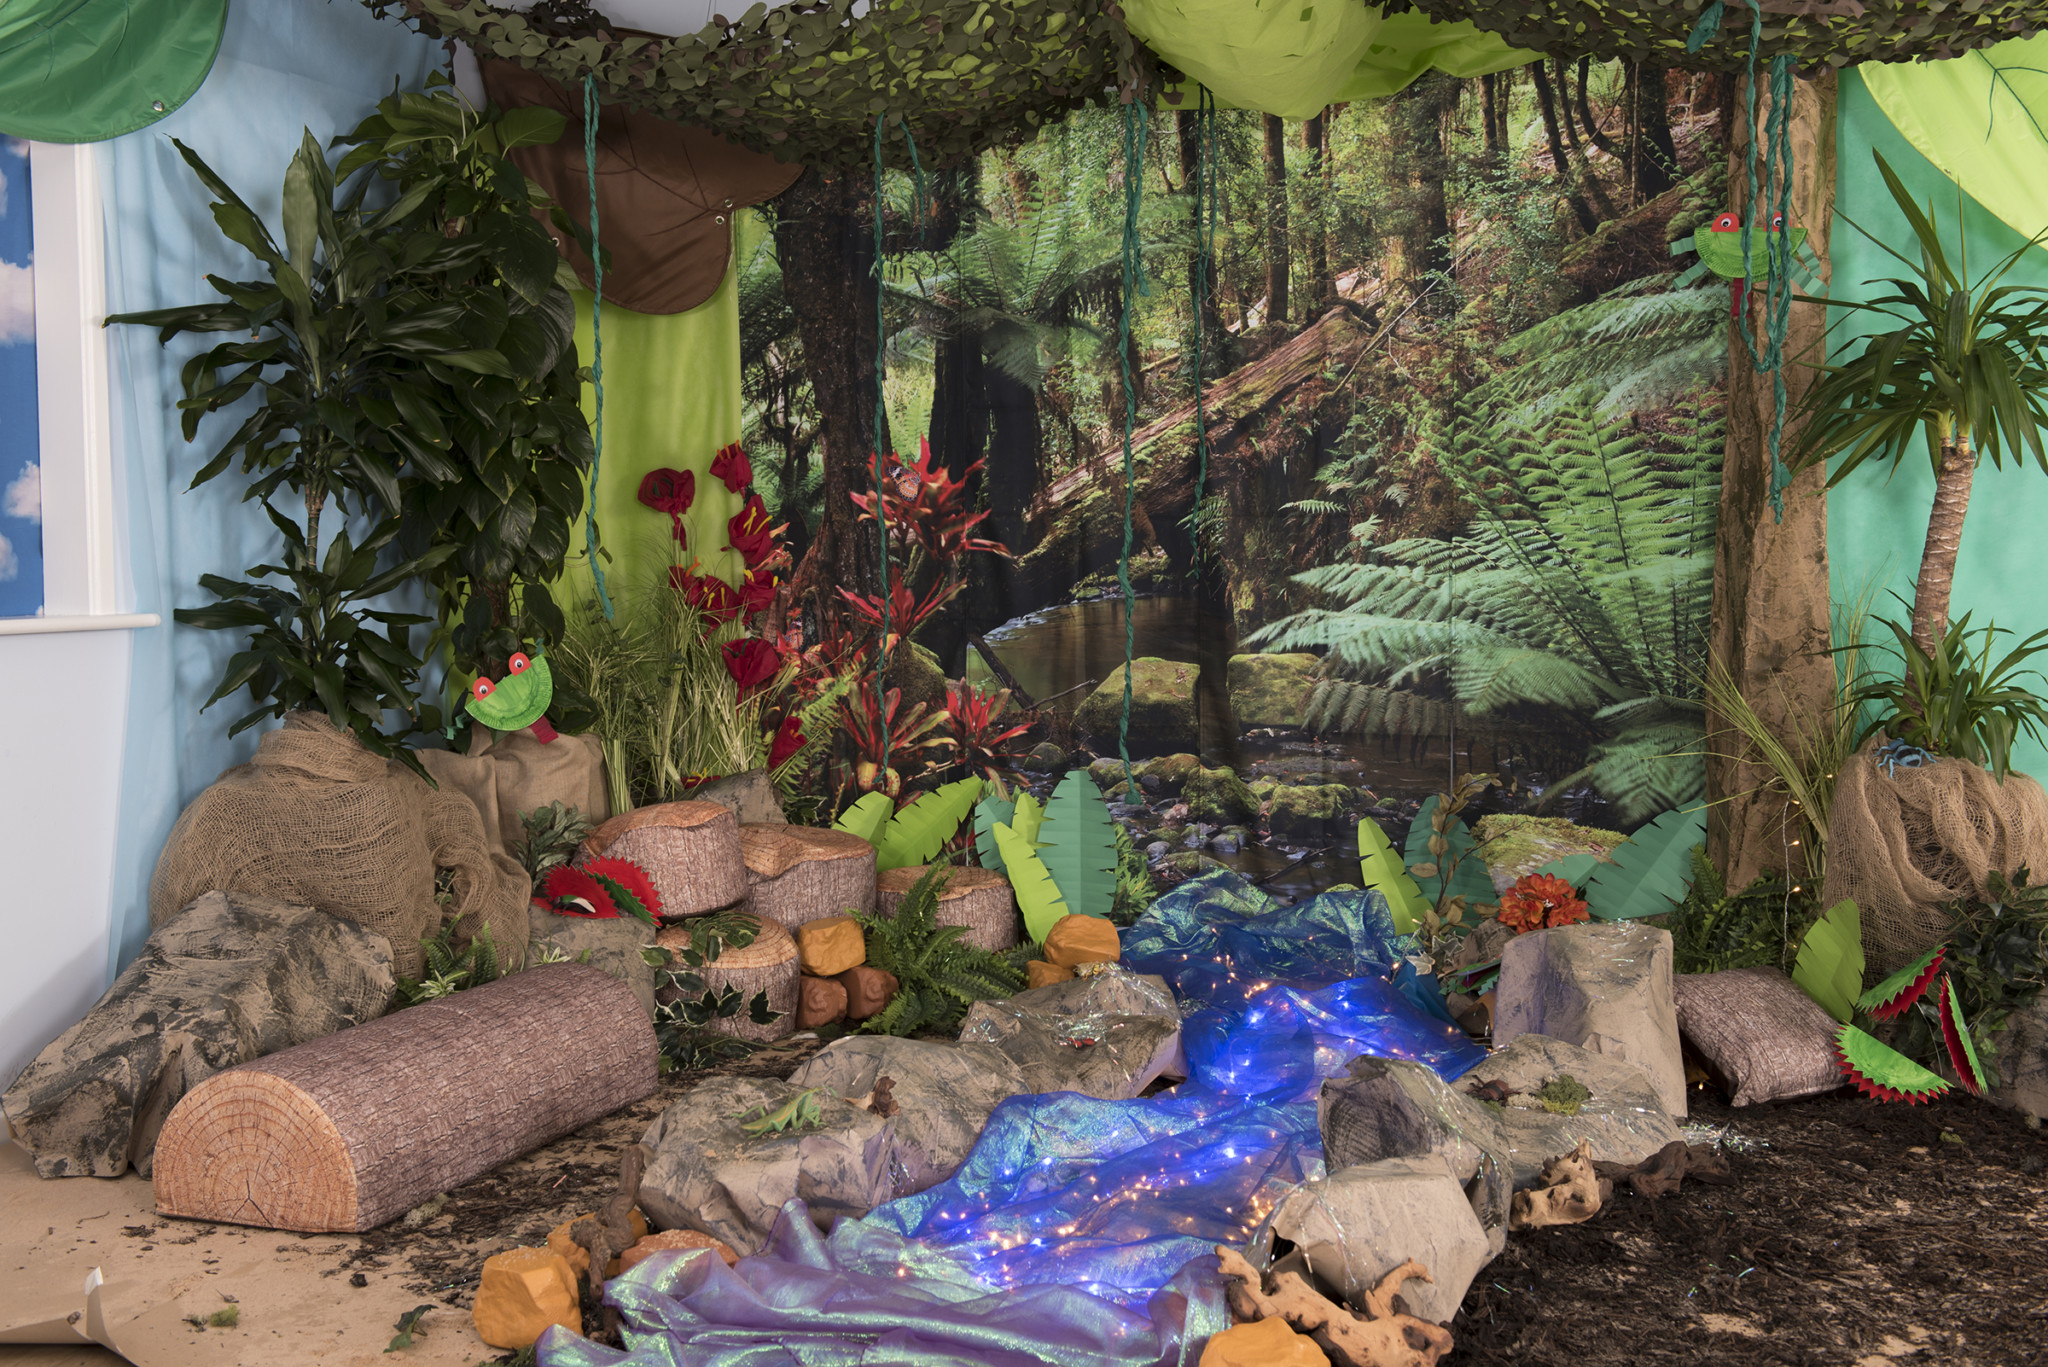 Rainforest backdrop immersive environment